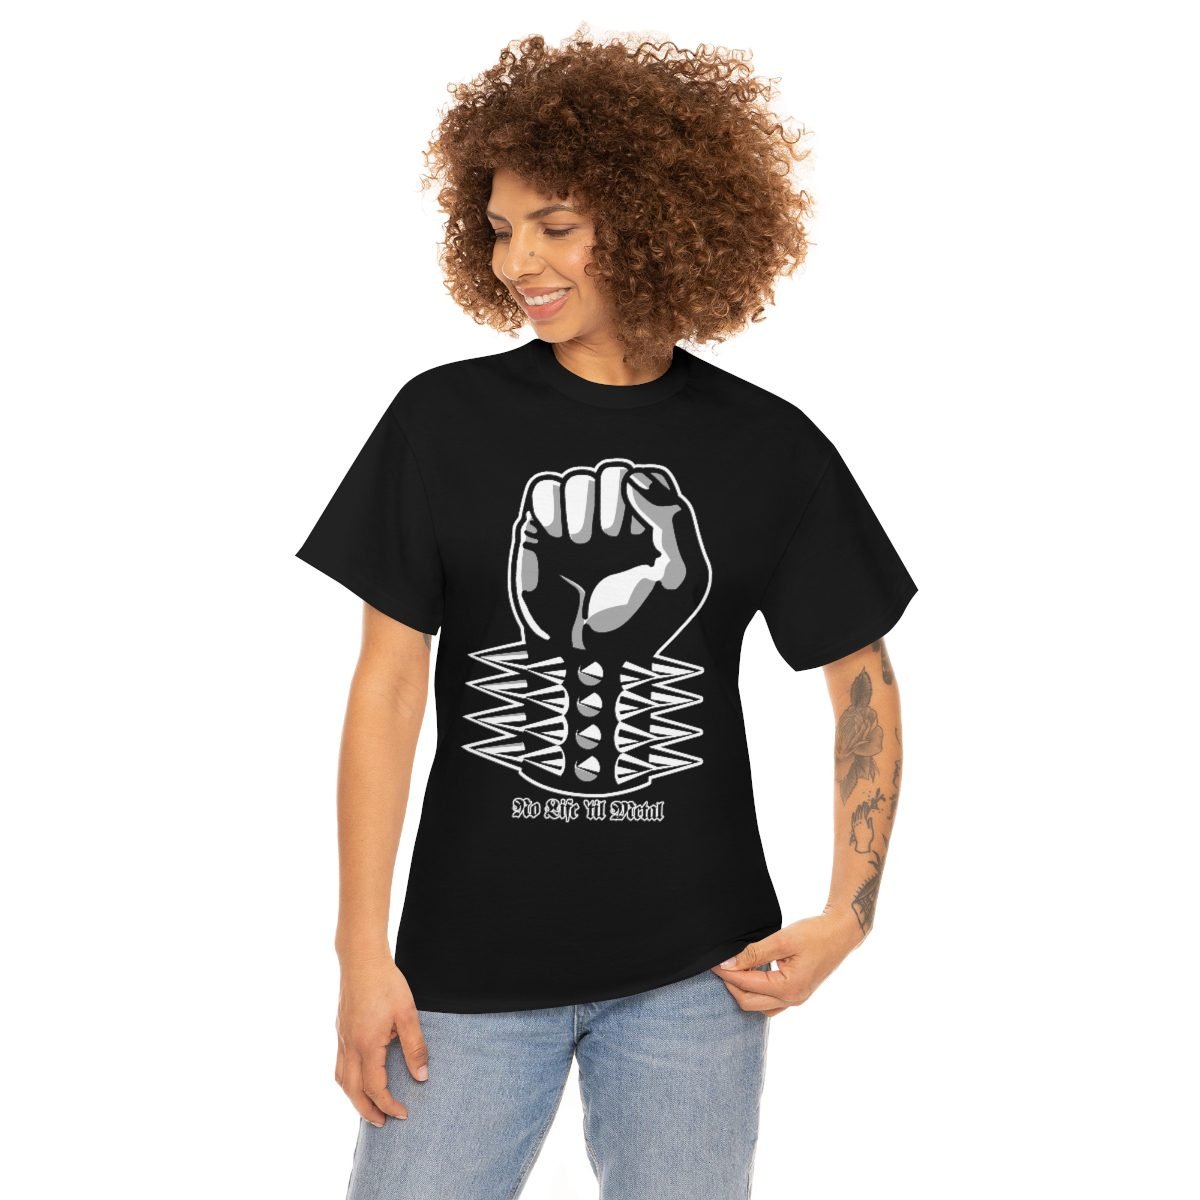 No Life ’til Metal Short Sleeve Tshirt BFS (5000)